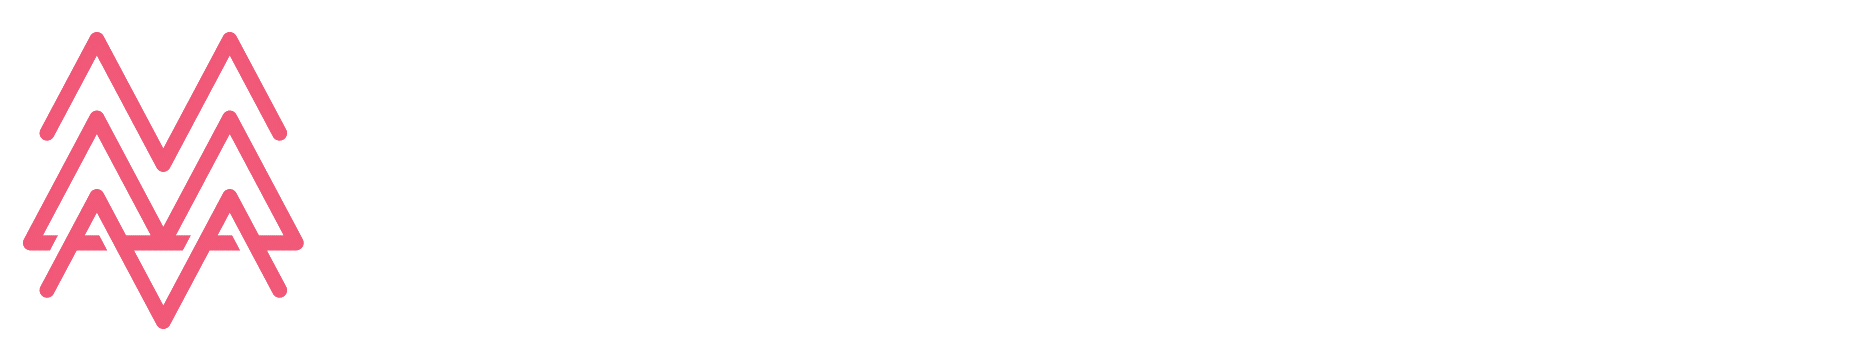 Modern Building Material